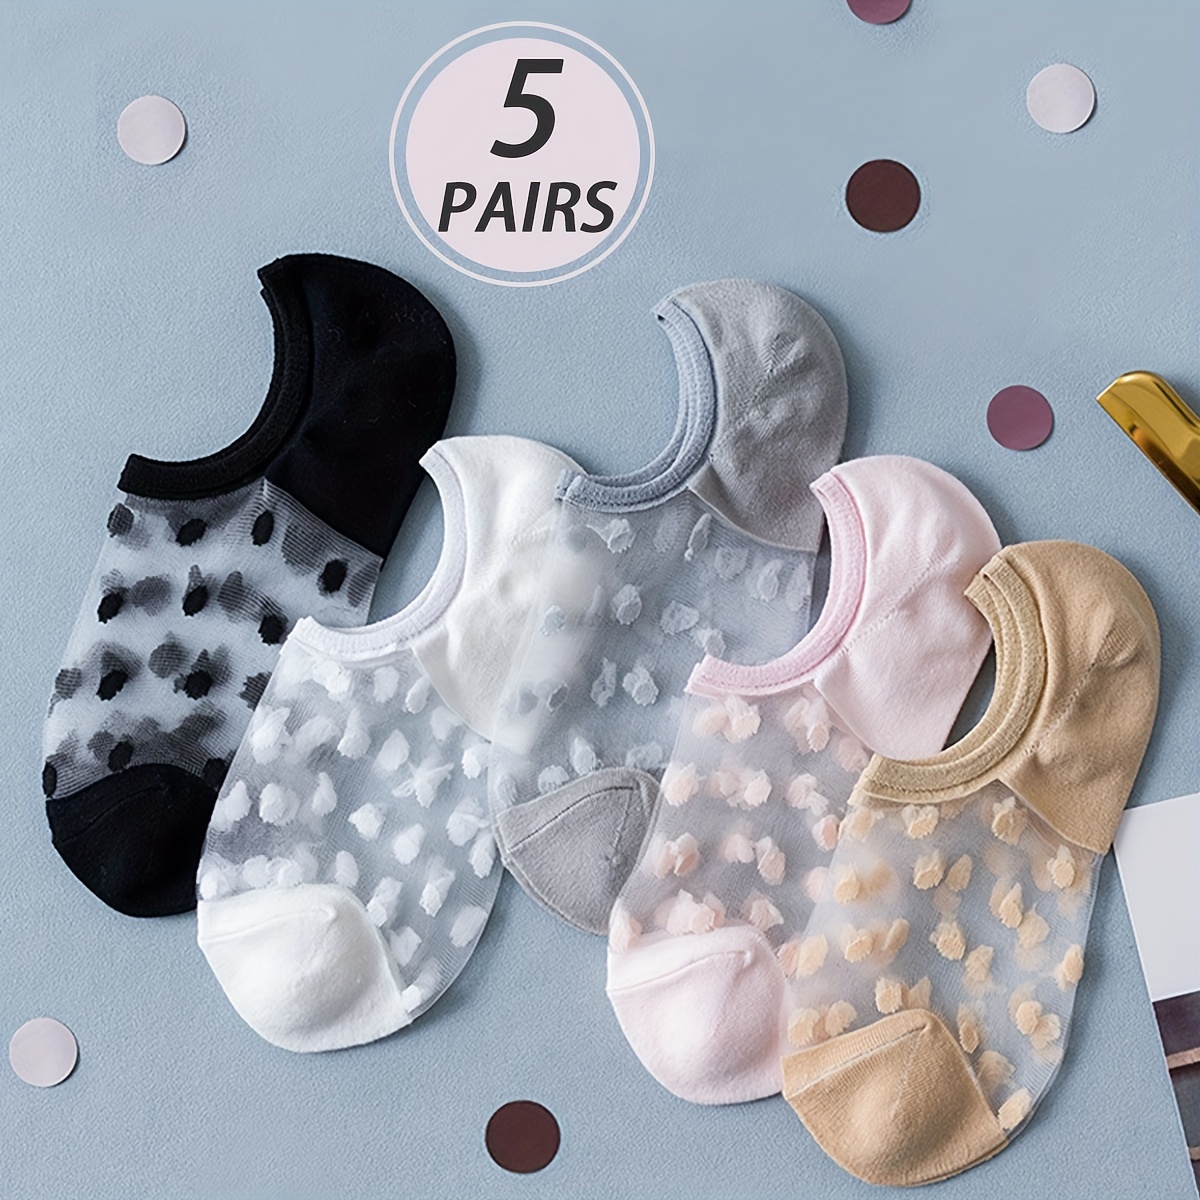 

5 Pairs Polka Dot Mesh Socks, Lightweight & Comfy Low Cut Boat Socks, Women's Stockings & Hosiery